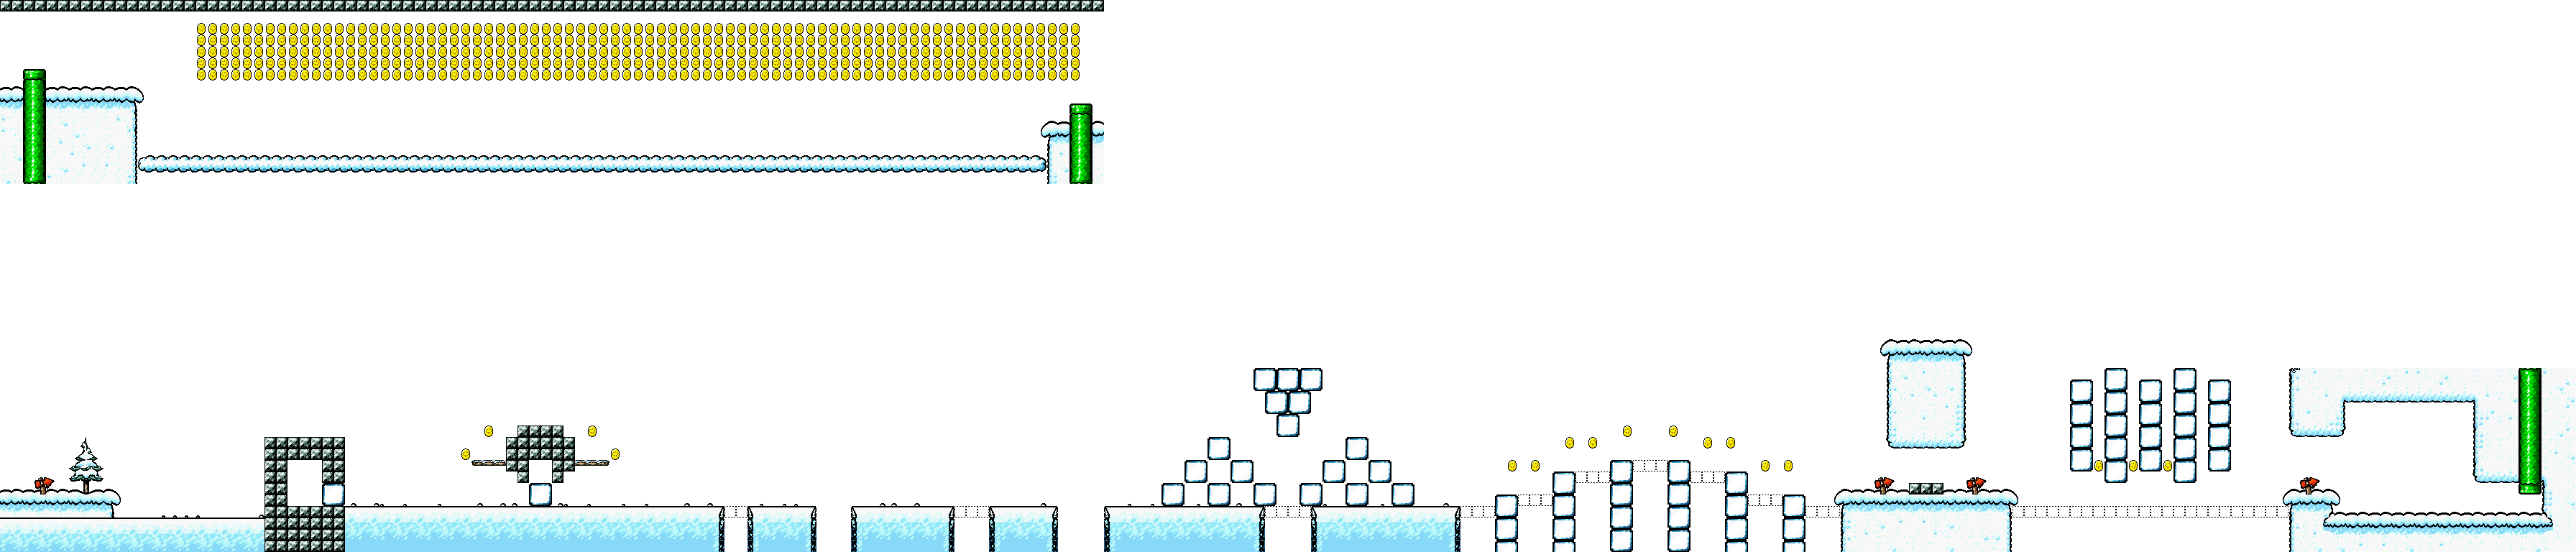 Super Mario World 2: Yoshi's Island - 5-3: Danger - Icy Conditions Ahead (2/7)